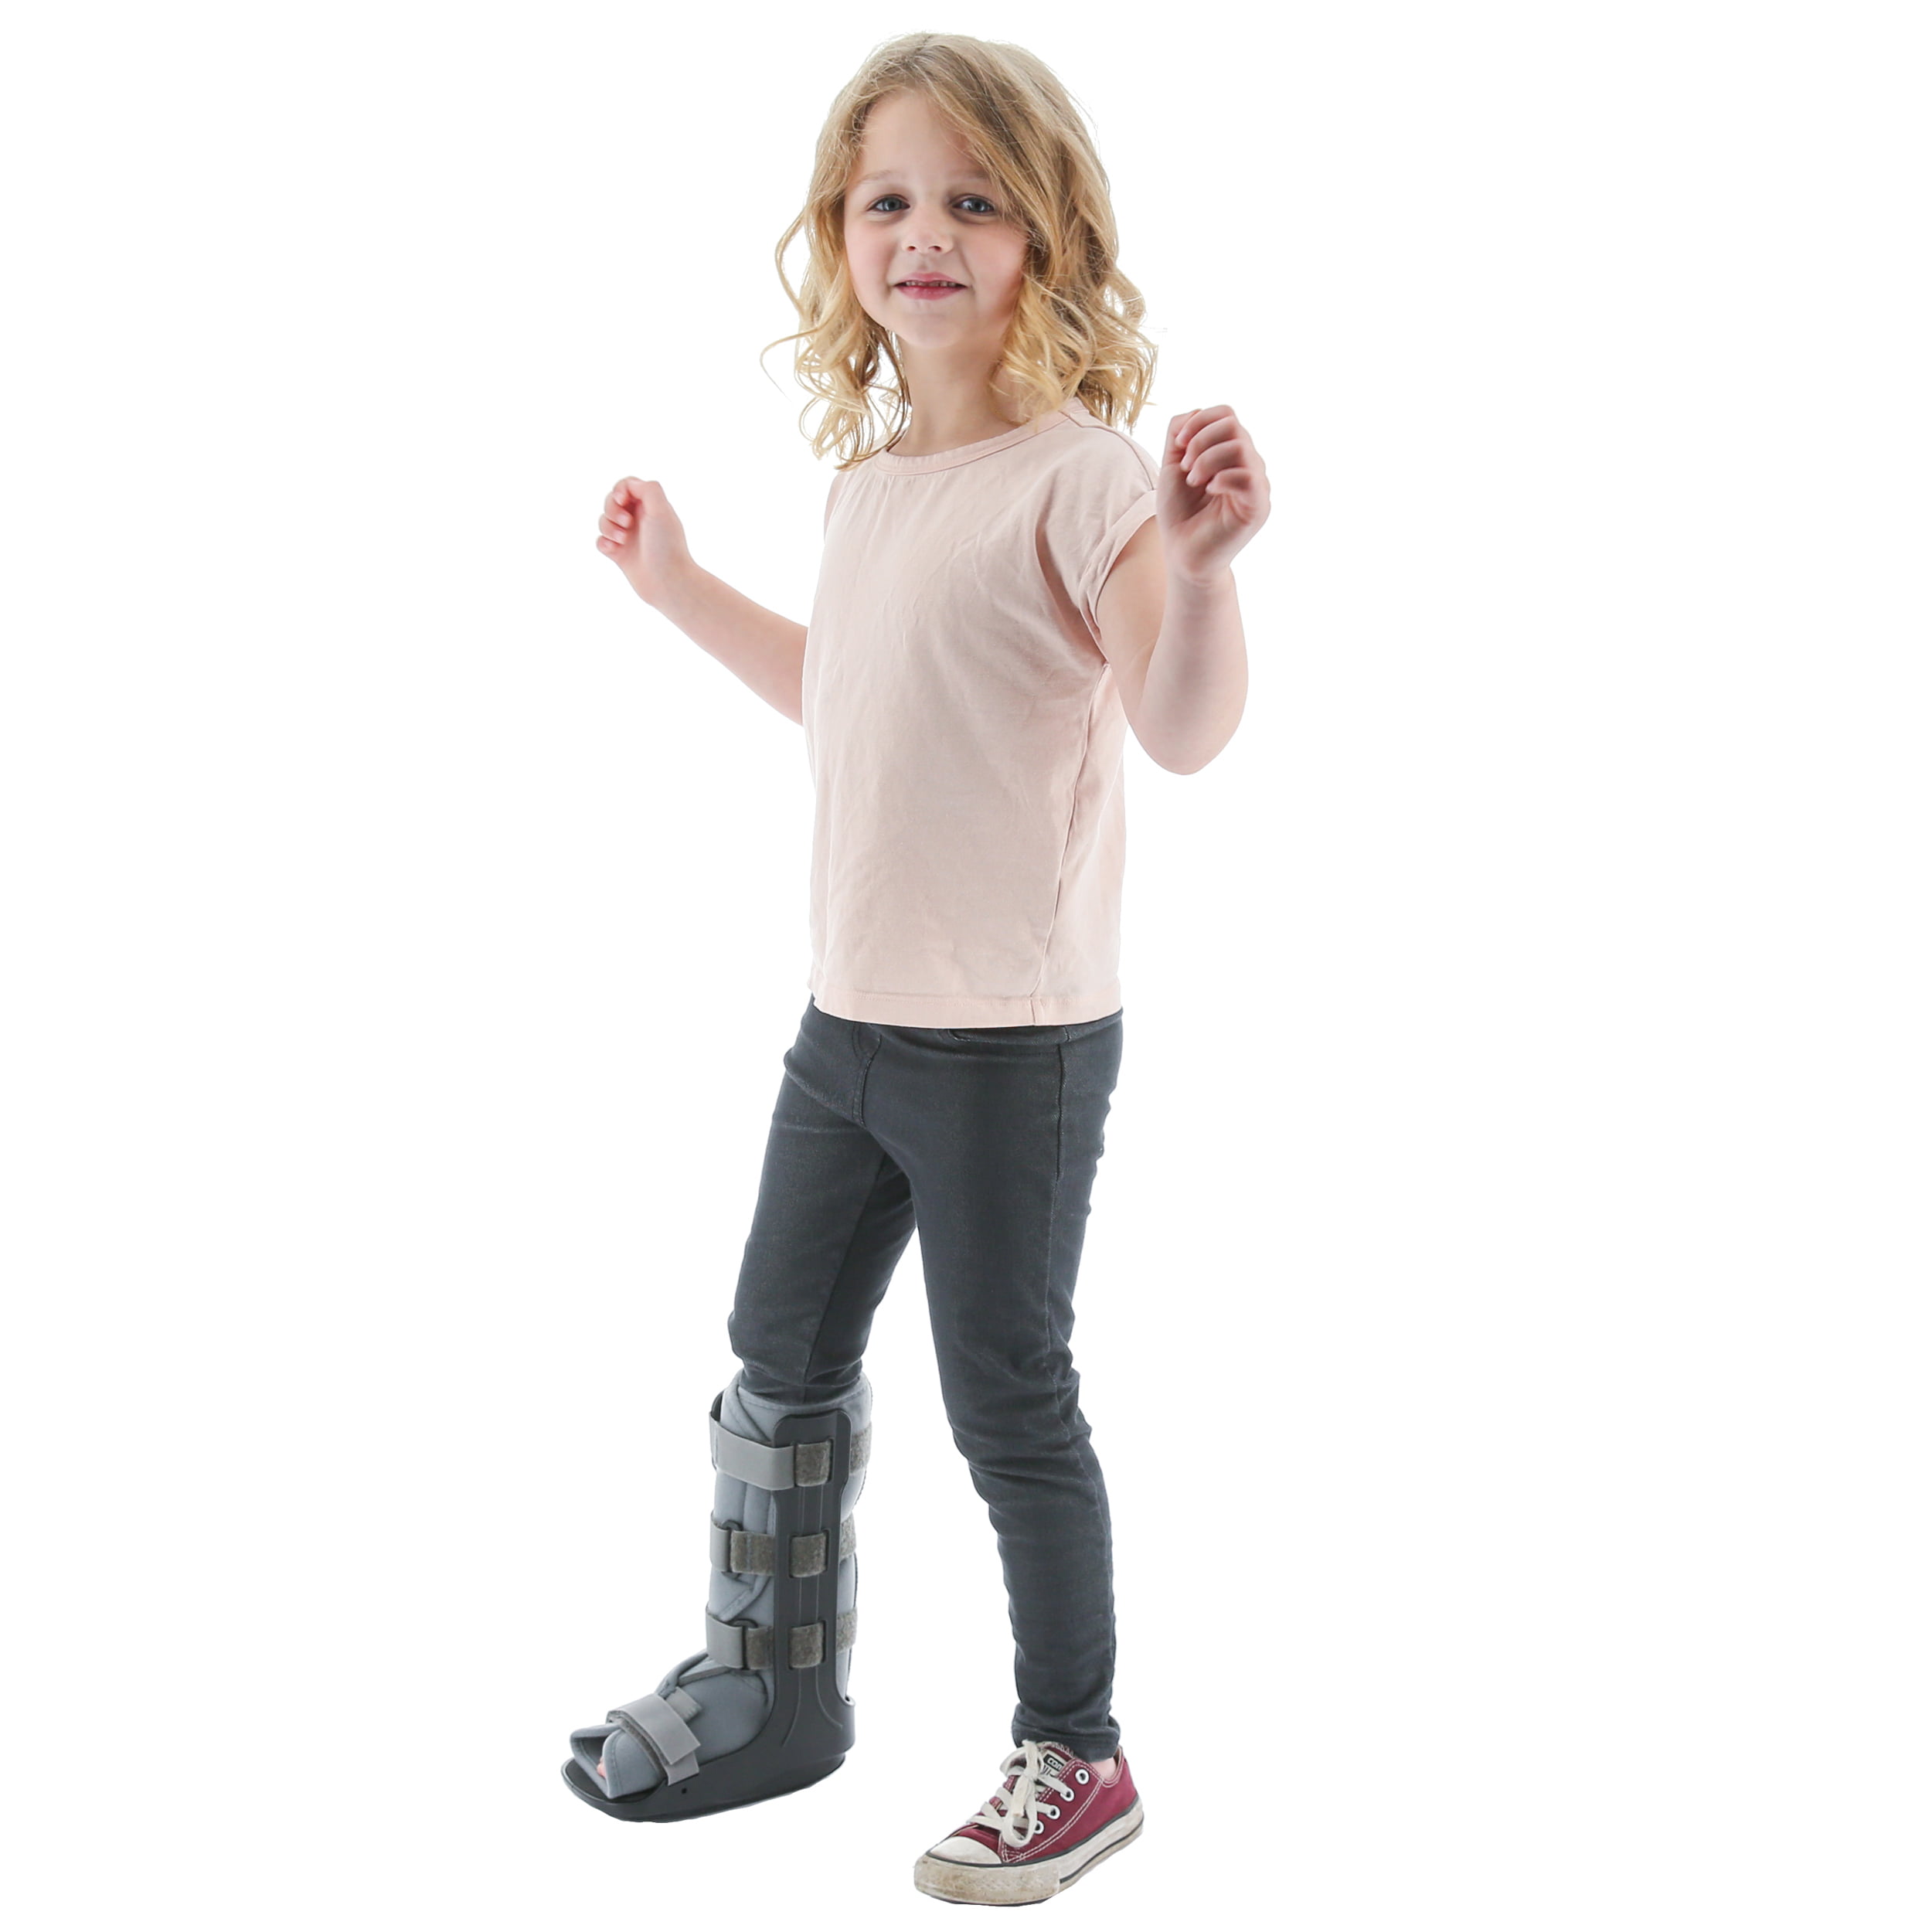 Swede-o Pediatric Walking Boot : Target